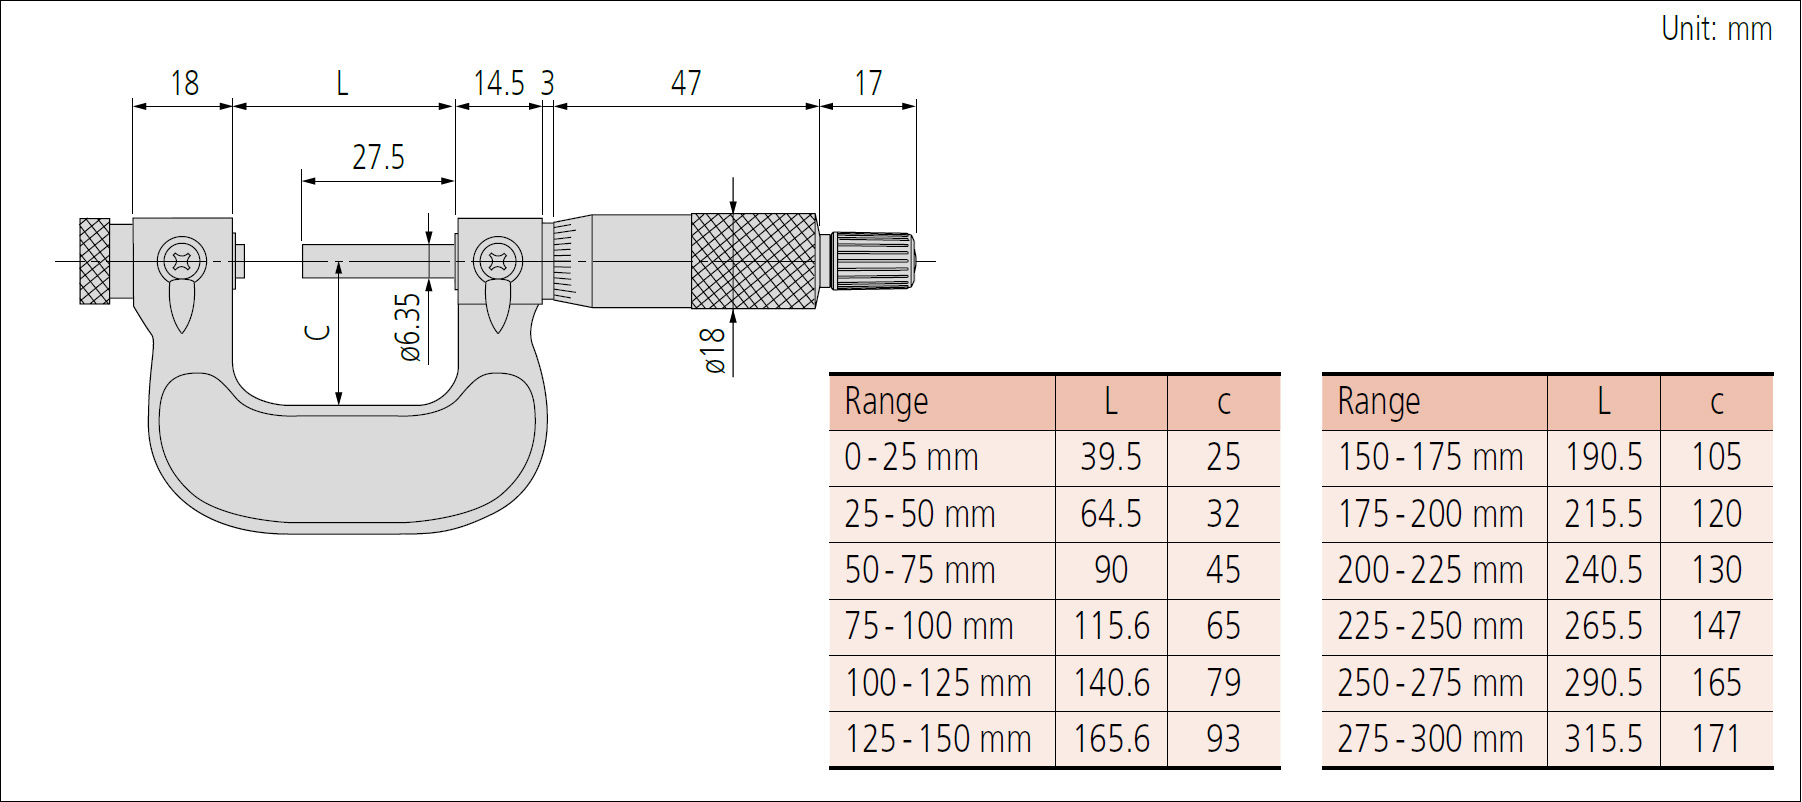 Mitutoyo 126 interchangeable anvil screw thread micrometer dimensions.